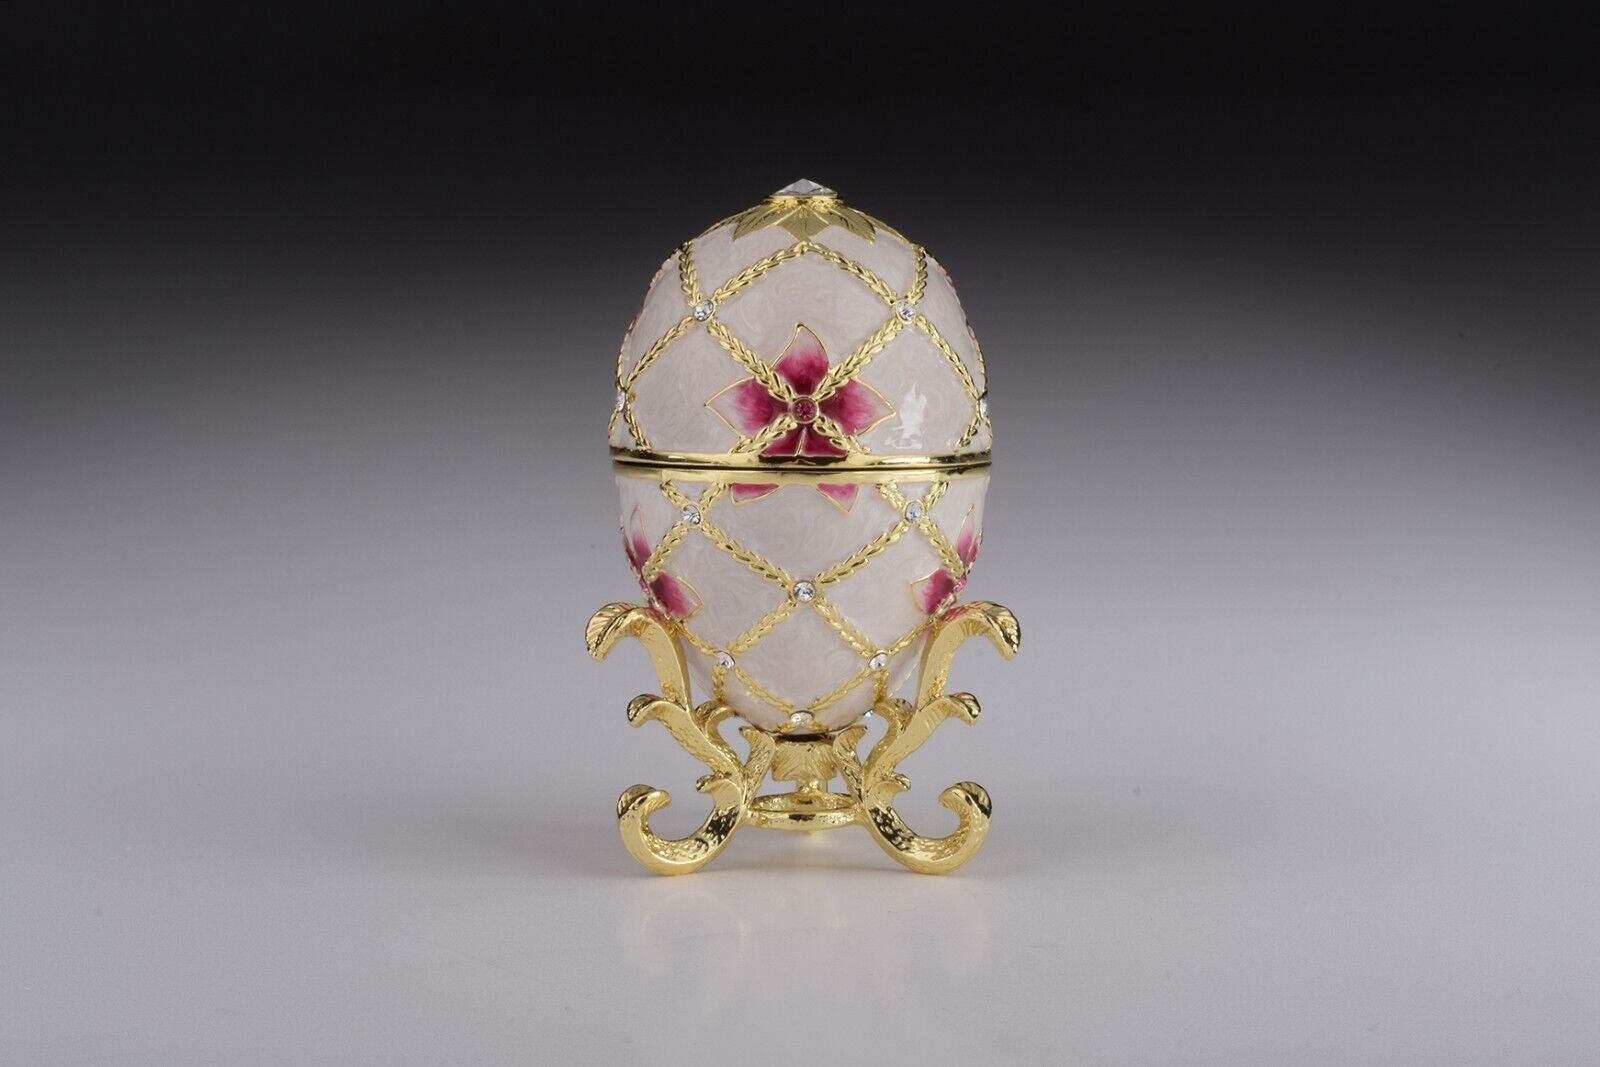 Keren Kopal  Faberge Egg & harp trinket box hand made with Austrian crystals